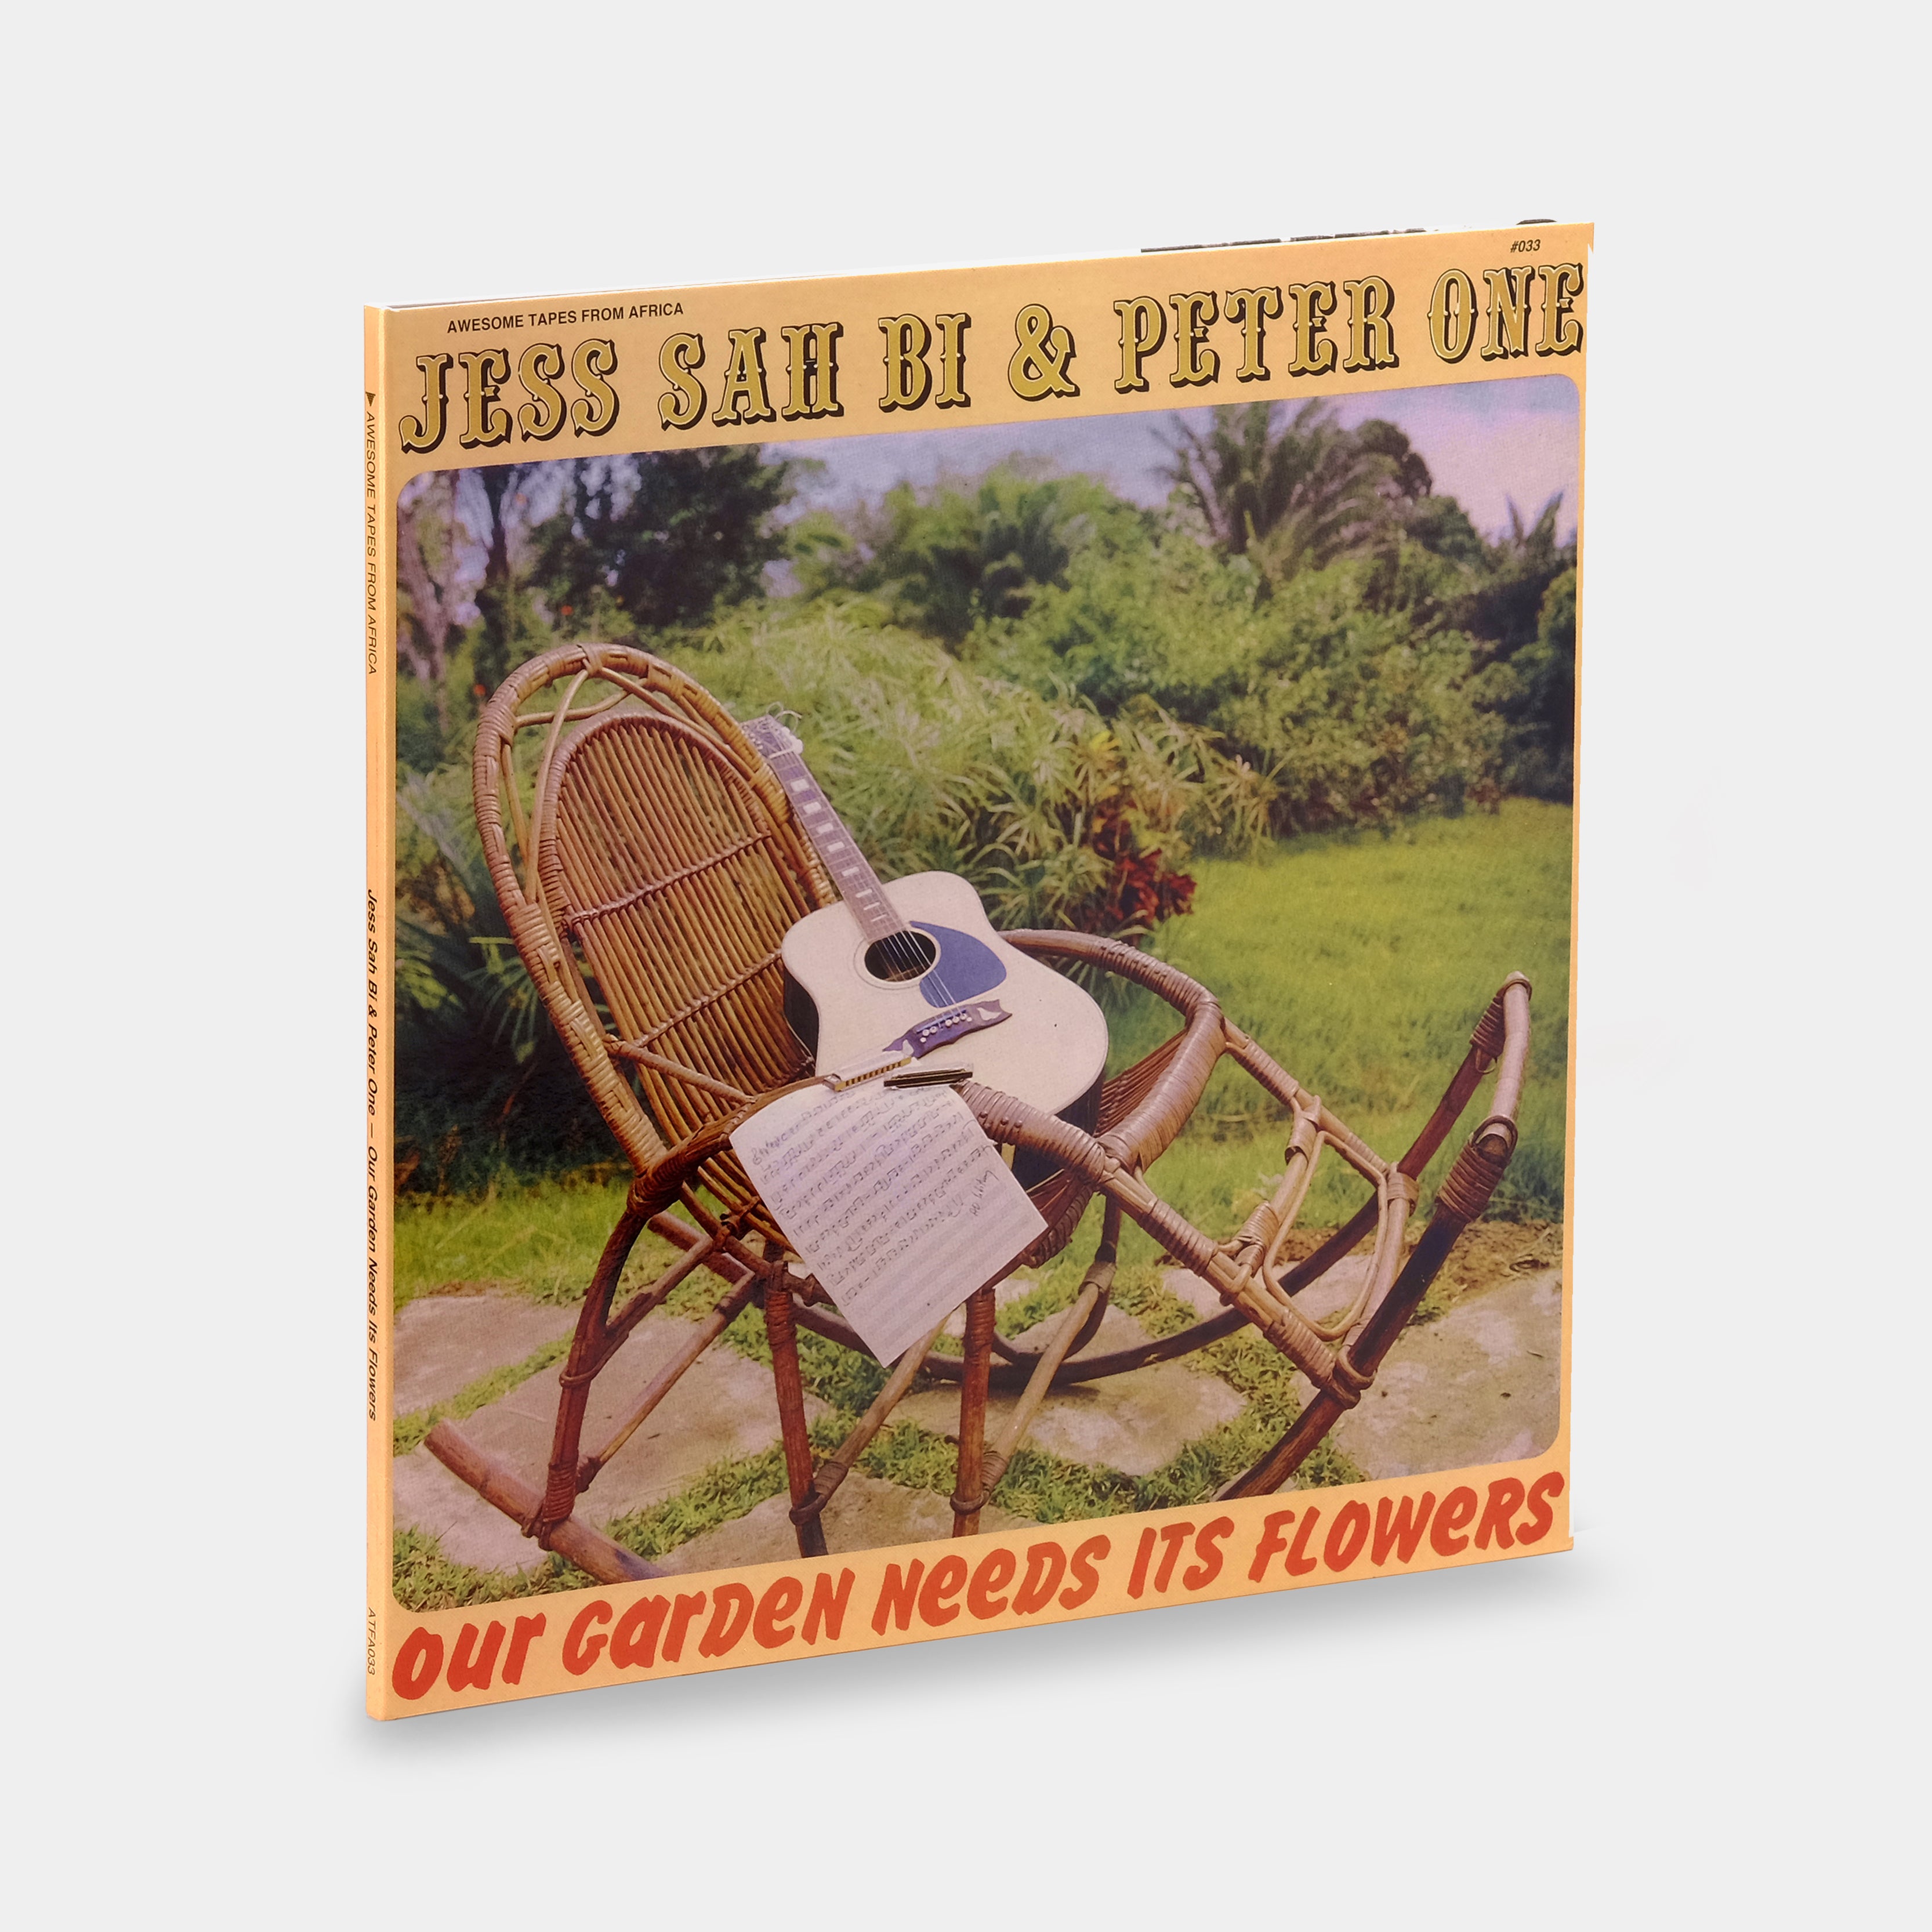 Jess Sah Bi & Peter One - Our Garden Needs Its Flowers LP Vinyl Record